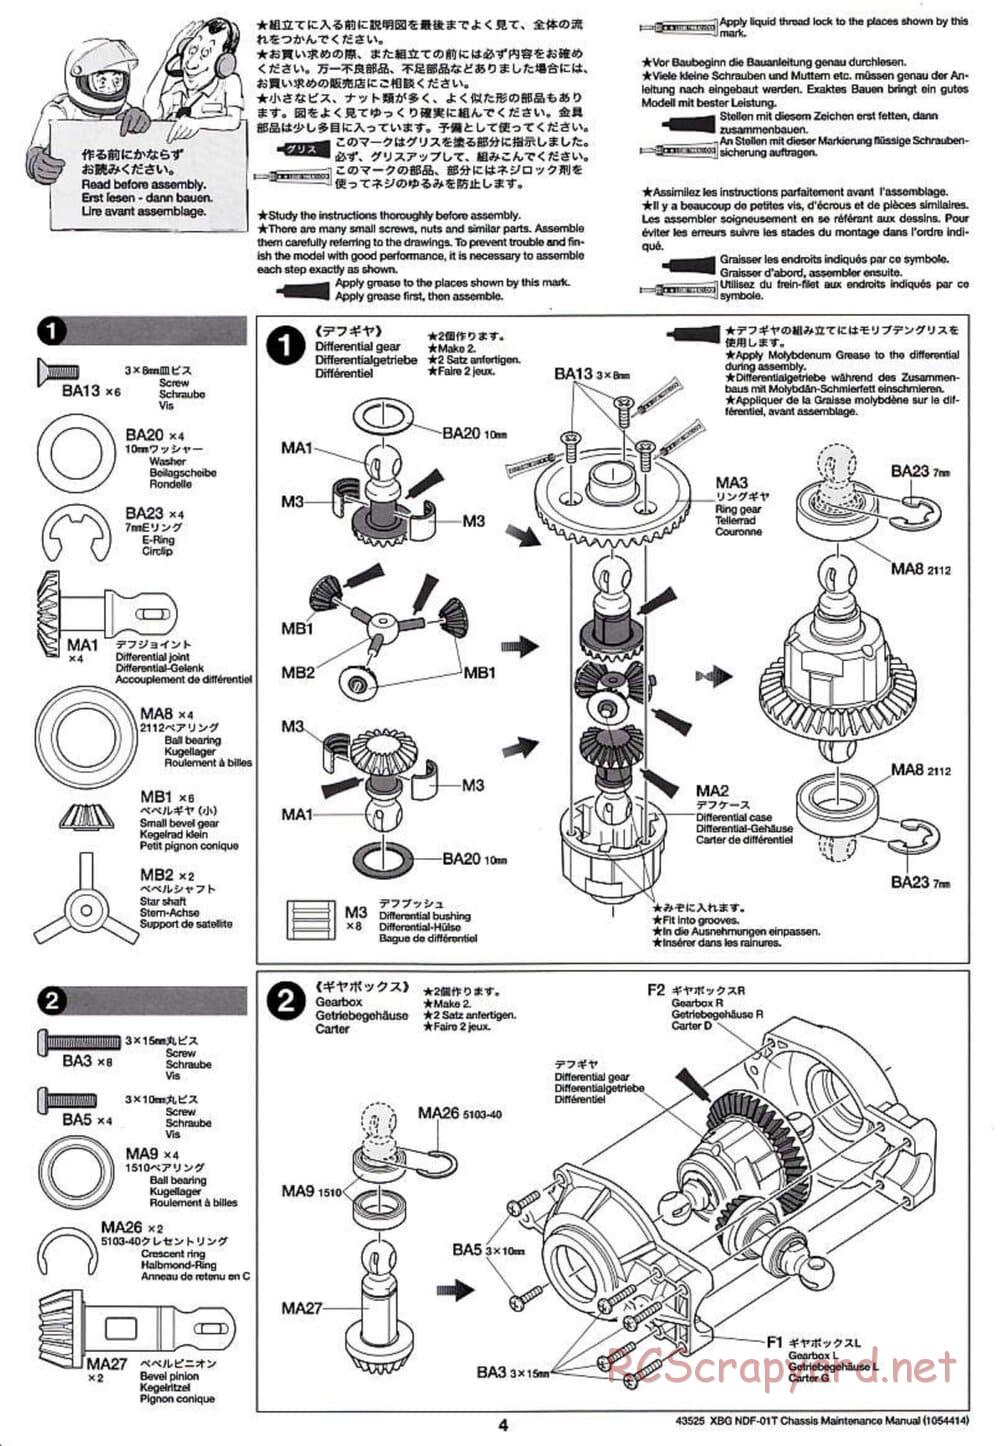 Tamiya - Nitro Crusher - NDF-01T - Maintenance Manual - Page 4